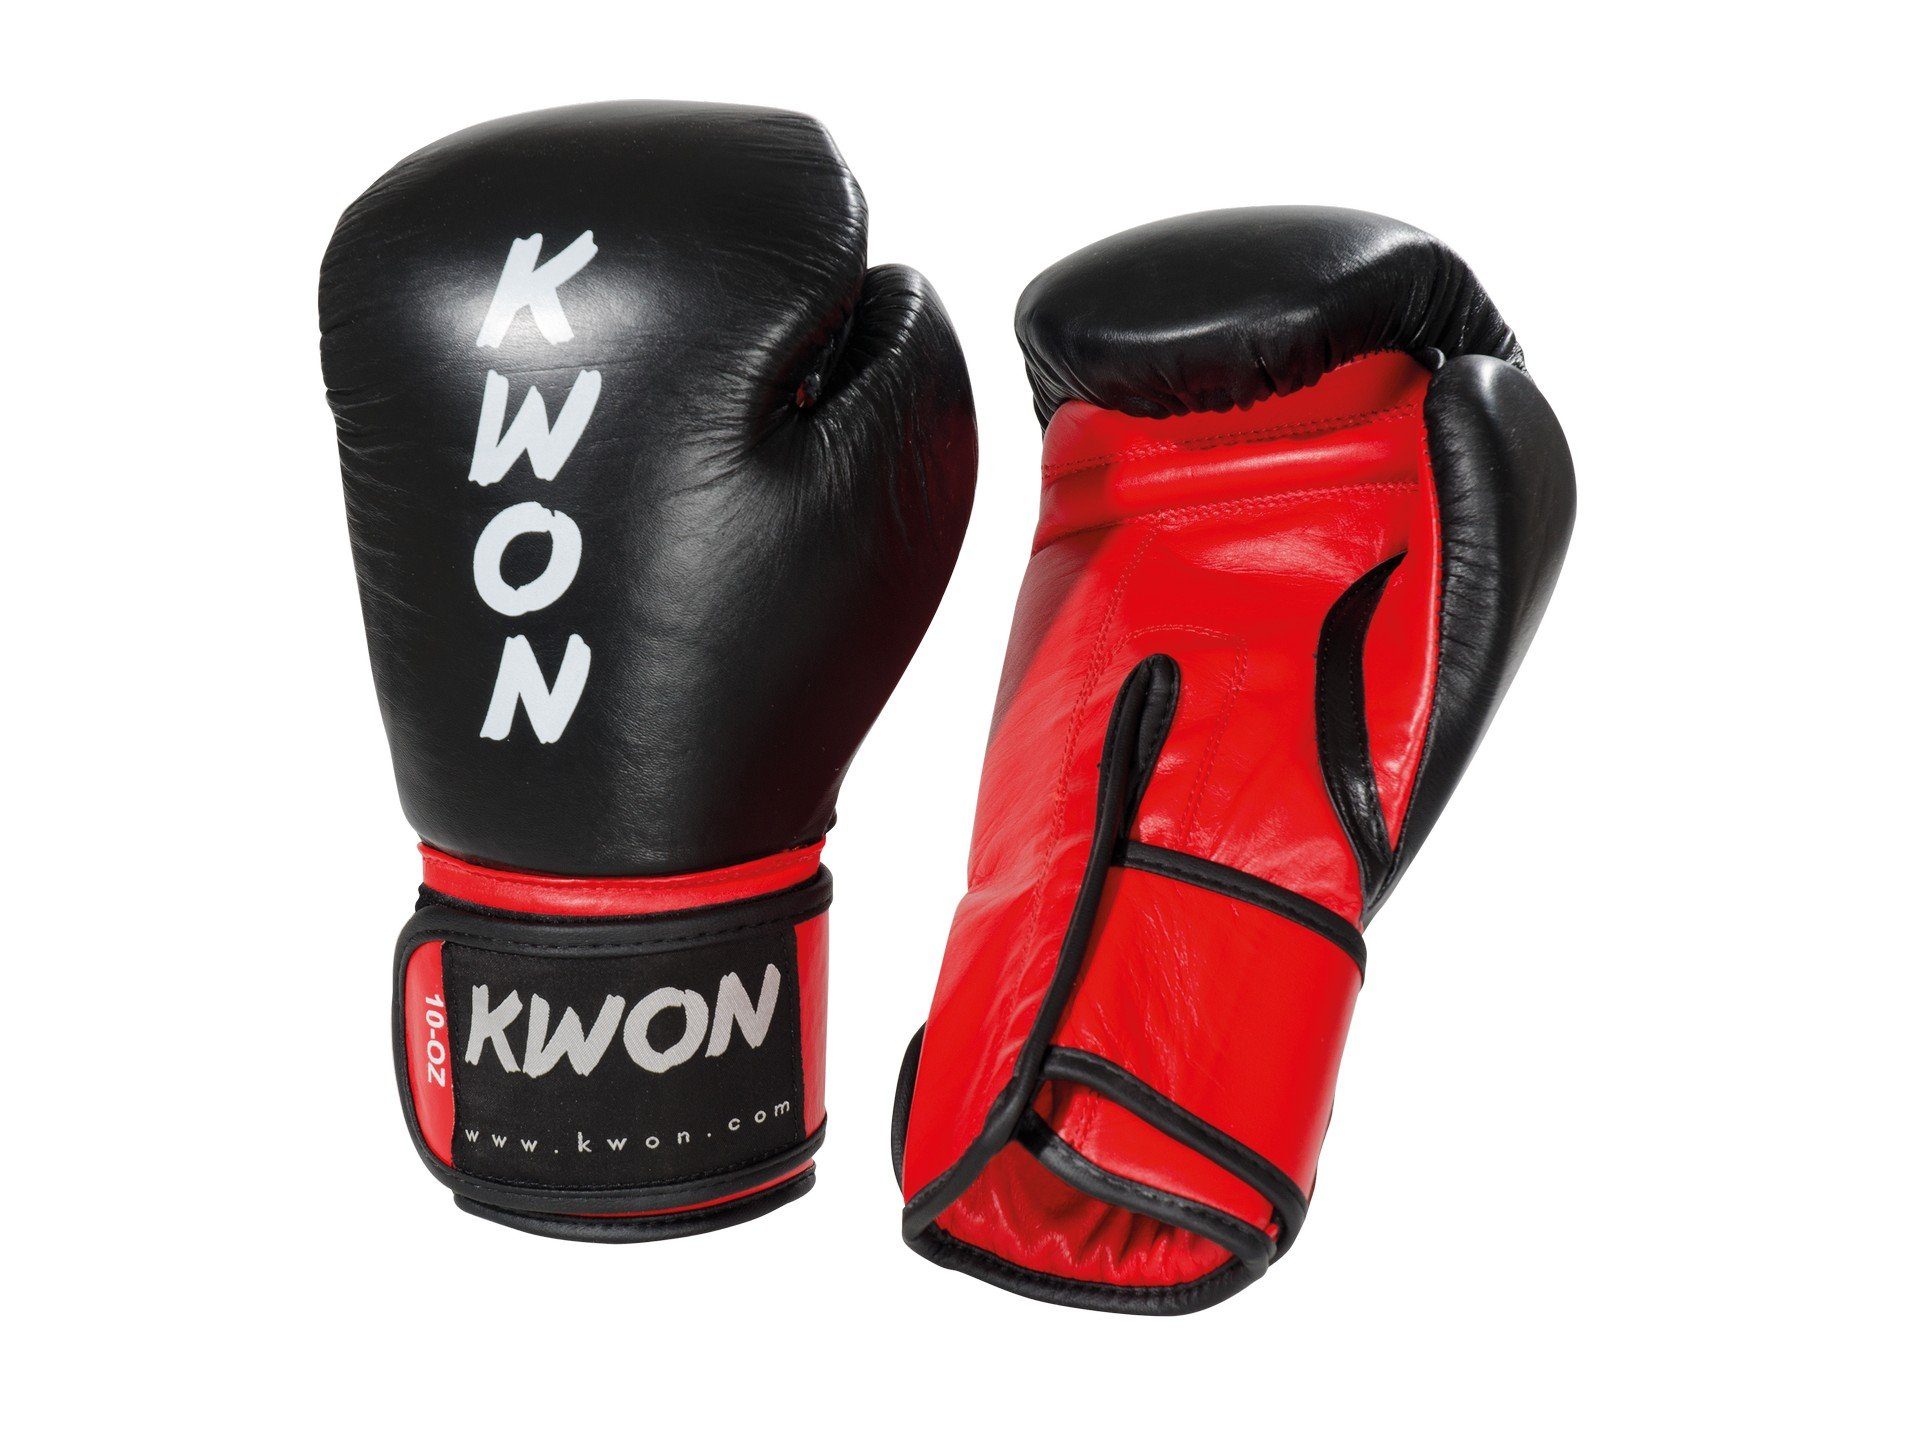 Champ Leder, schwarz/blau Box-Handschuhe Thaiboxen Paar), Kickboxen KO Profi Profi Ergo KWON anerkannt Leder Boxen Ausführung, (Vollkontakt, Boxhandschuhe Form, Echtes WKU